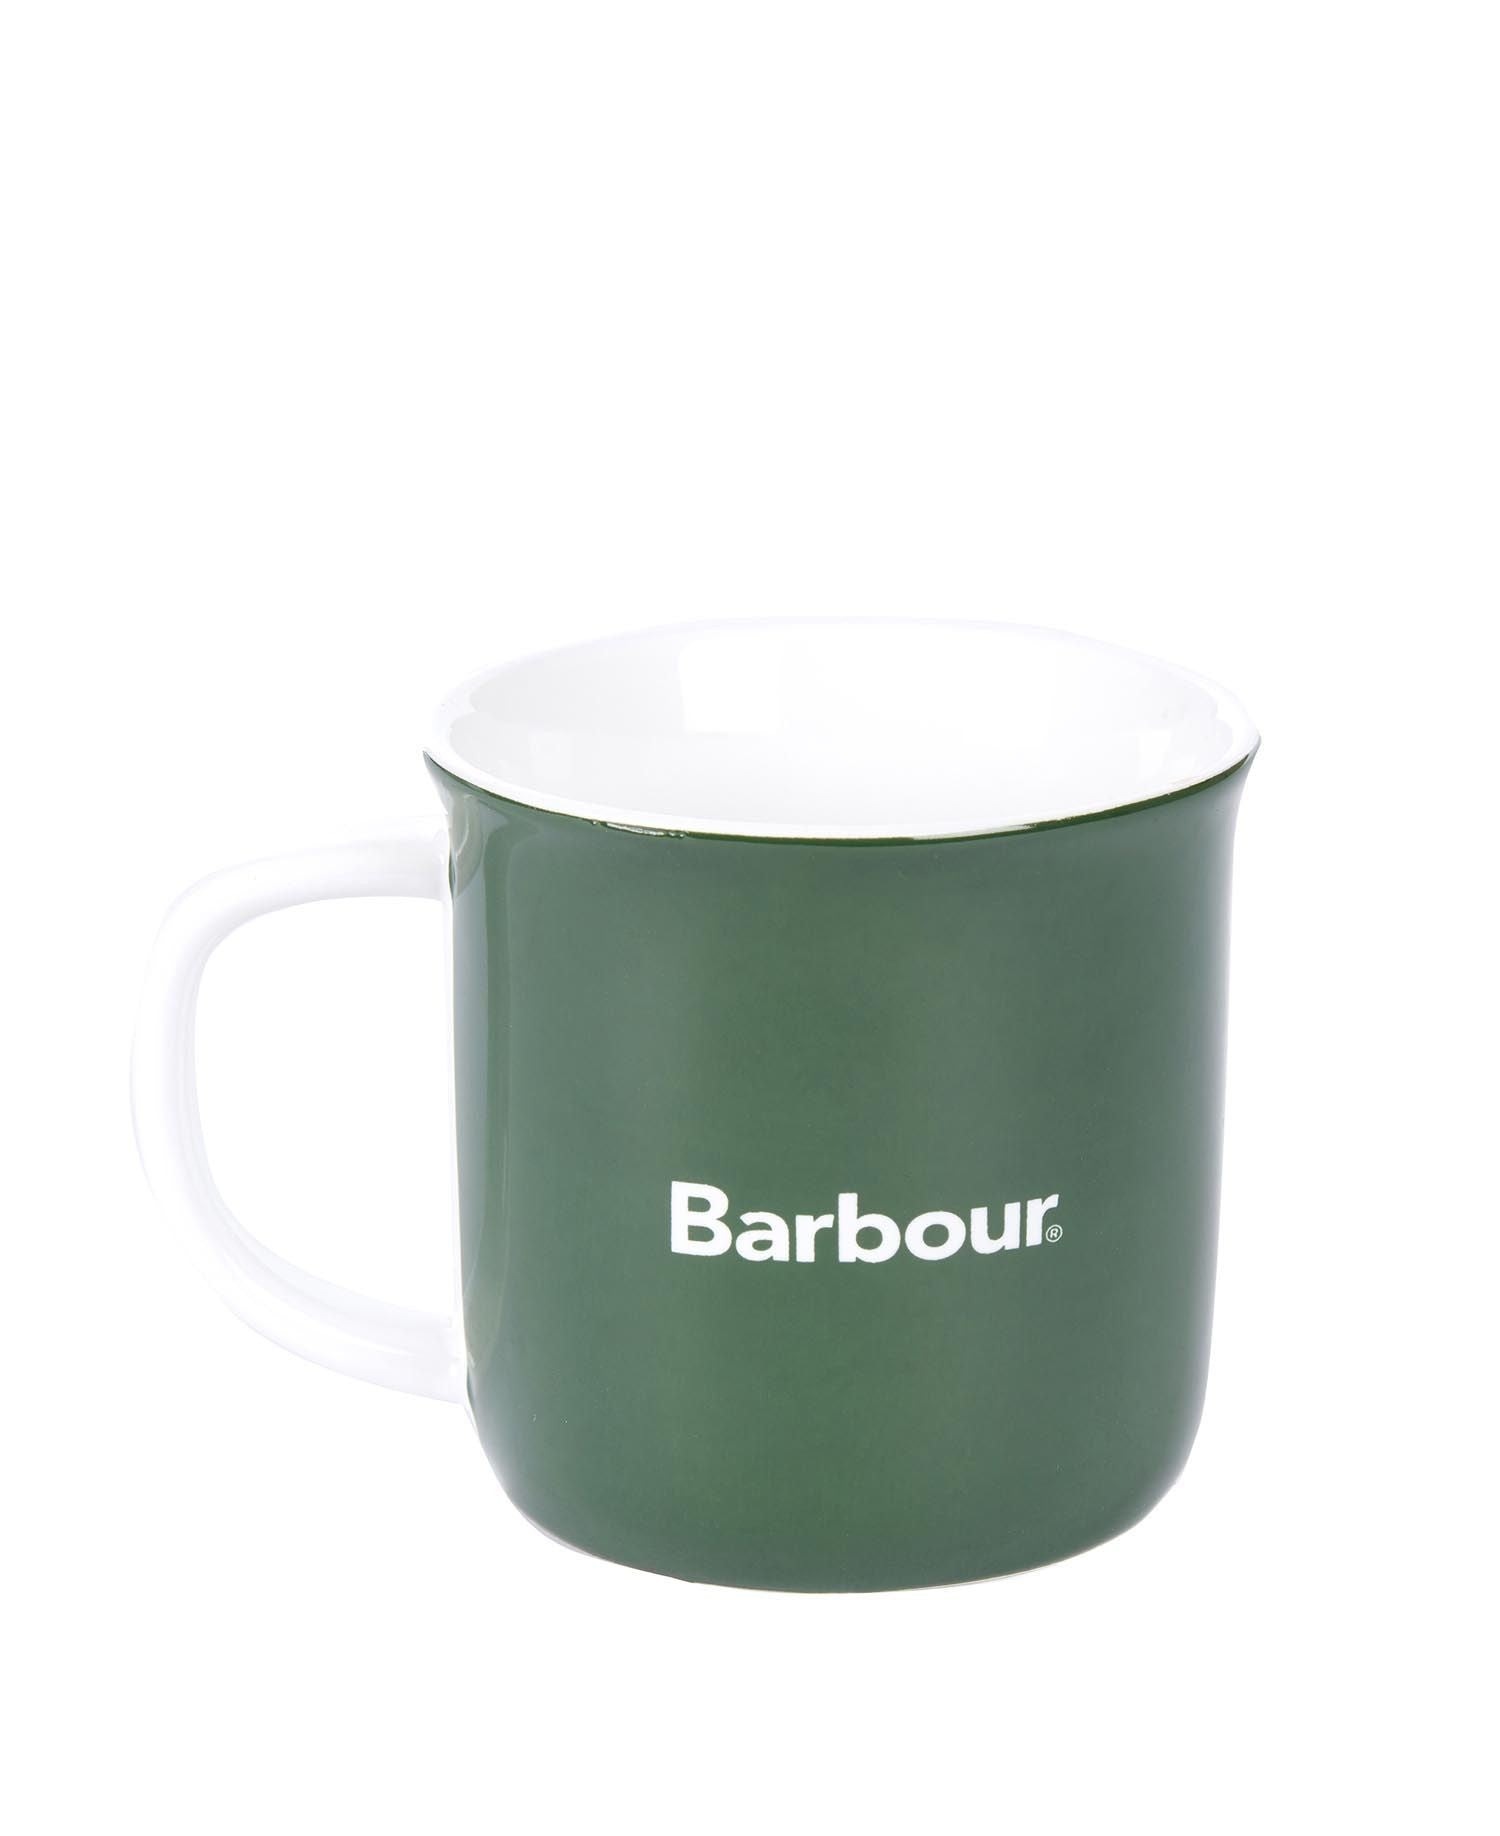 Barbour Green Ceramic Mug